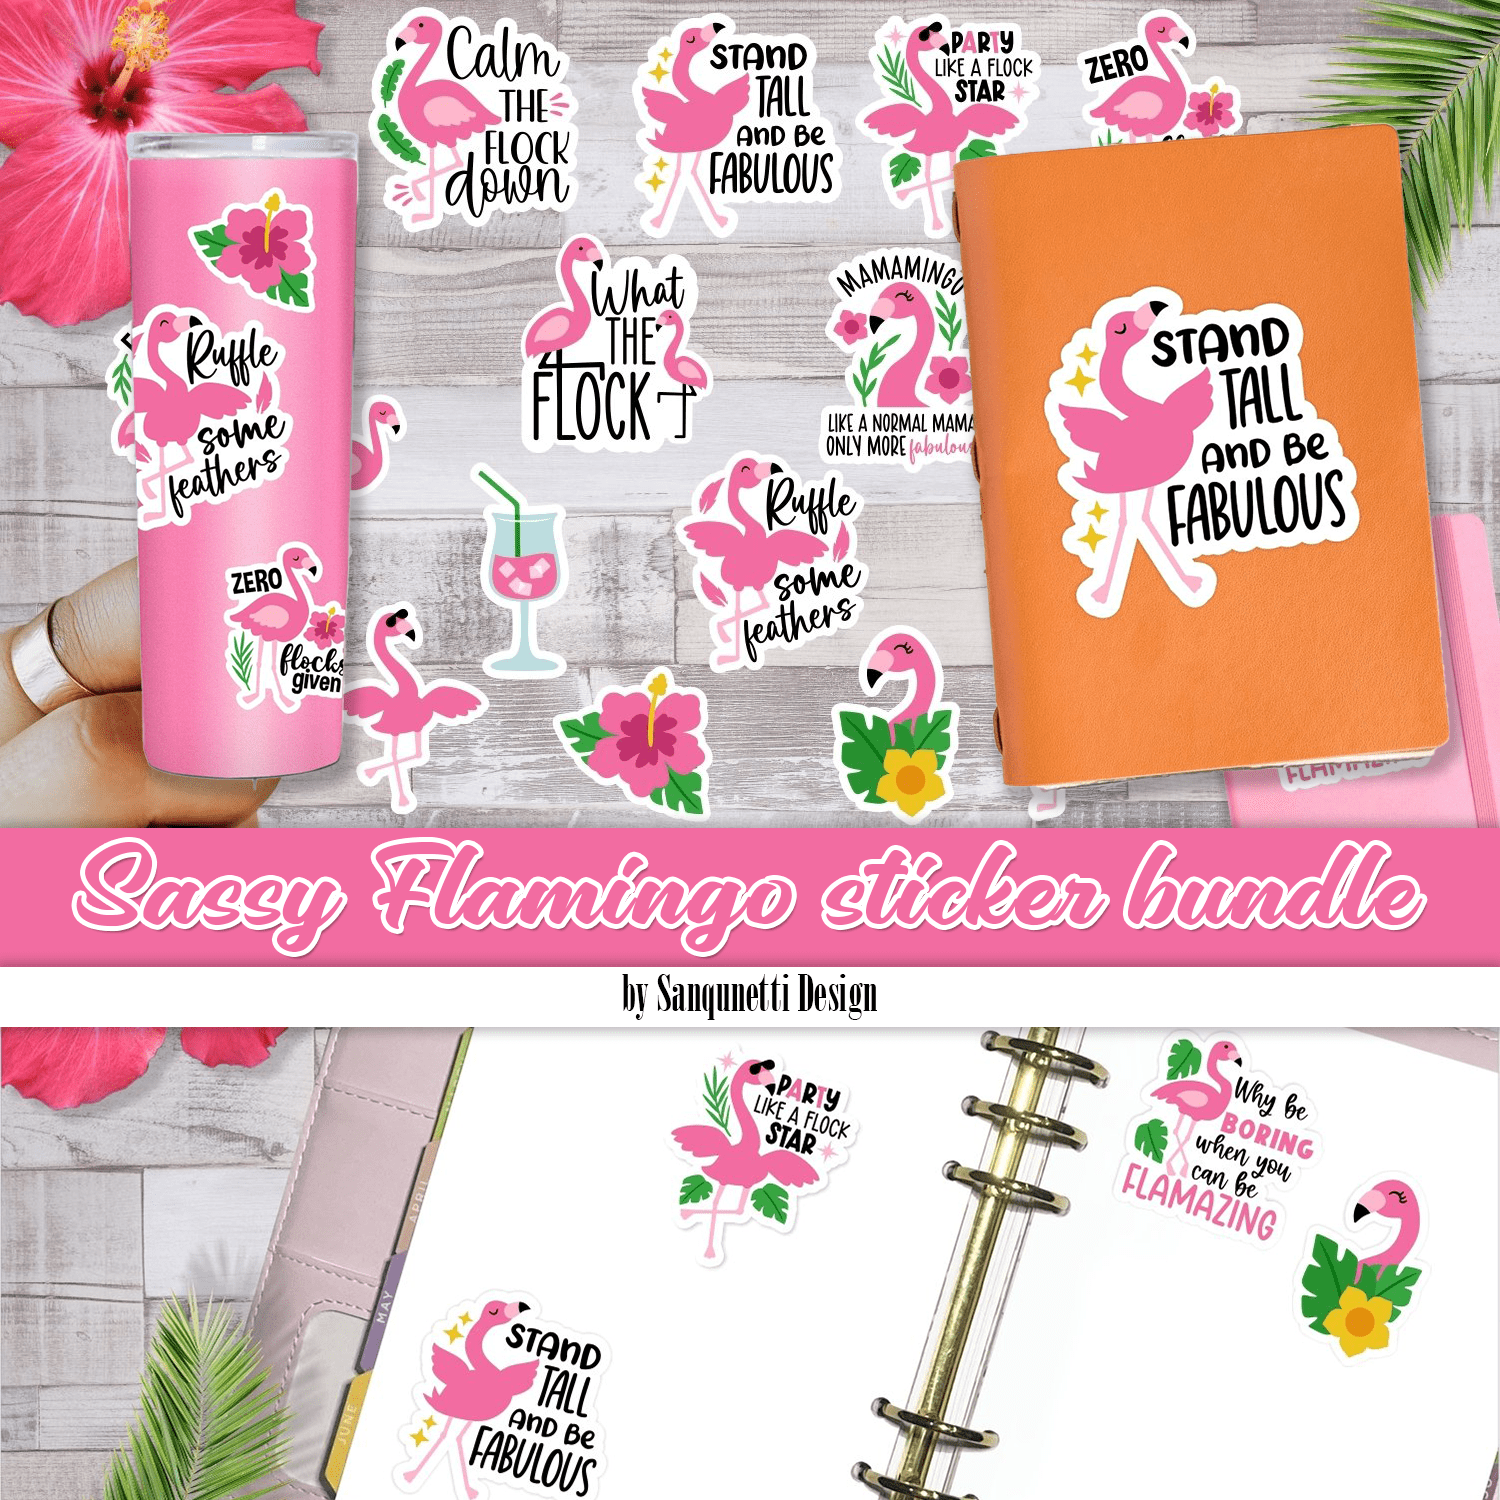 Sassy flamingo sticker bundle created by Sanqunetti Design.